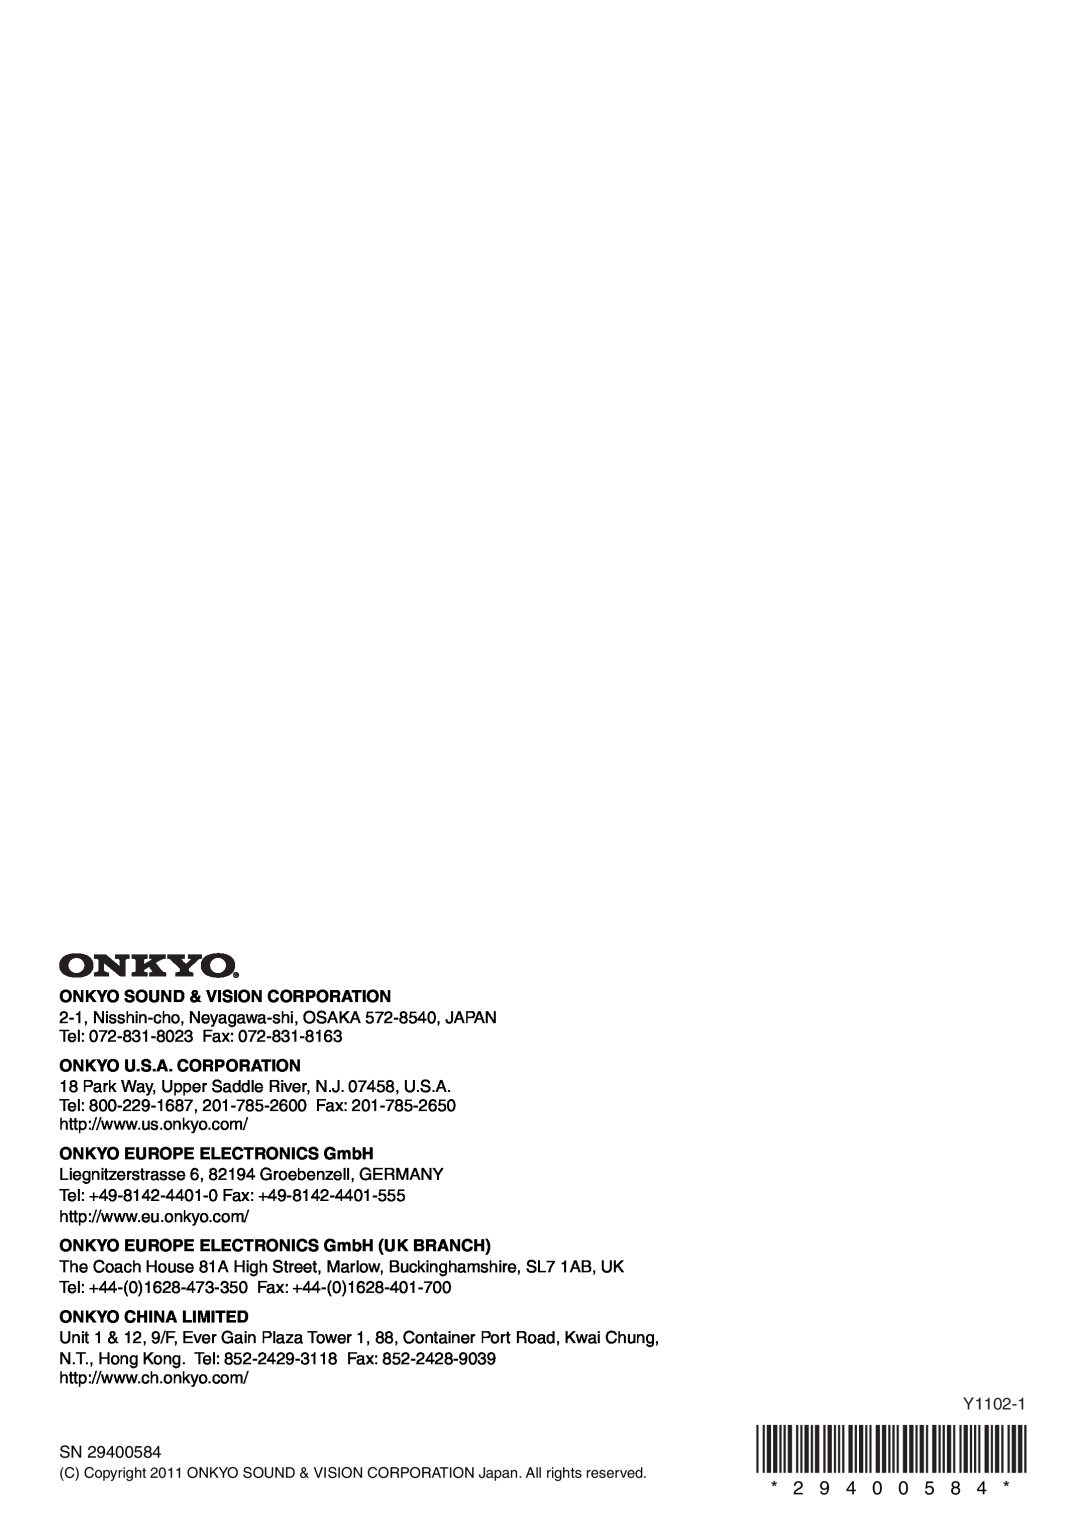 Onkyo TX-NR579 2 9 4 0 0 5 8, Onkyo Sound & Vision Corporation, Onkyo U.S.A. Corporation, ONKYO EUROPE ELECTRONICS GmbH 